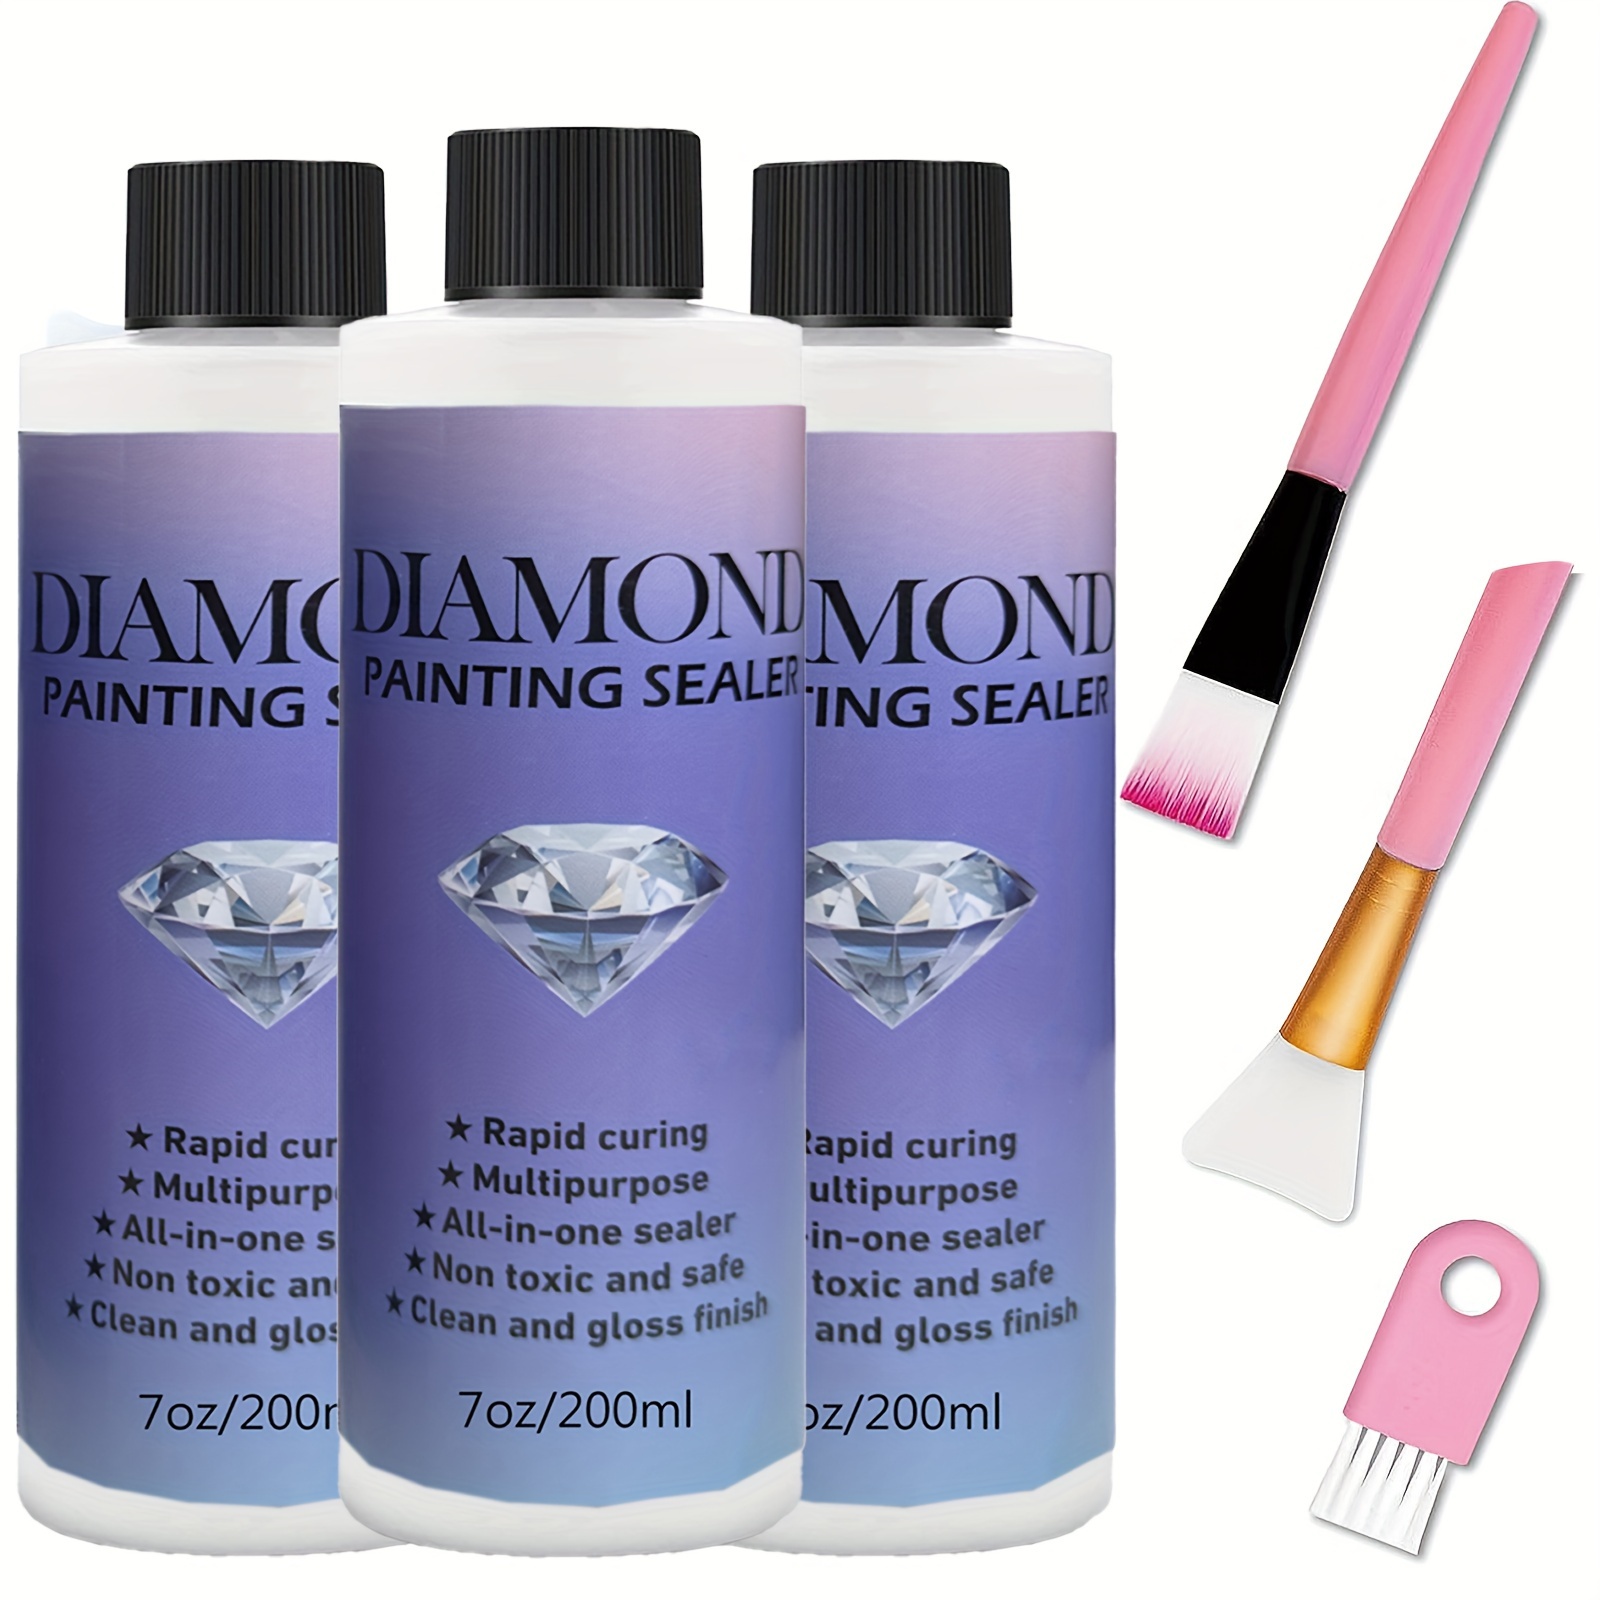 Diamond Painting Sealer Glue DIY 5D Diamond Painting Puzzle Brightener  Transparent Glue Quick Drying Hold Shine Effect Sealant - AliExpress